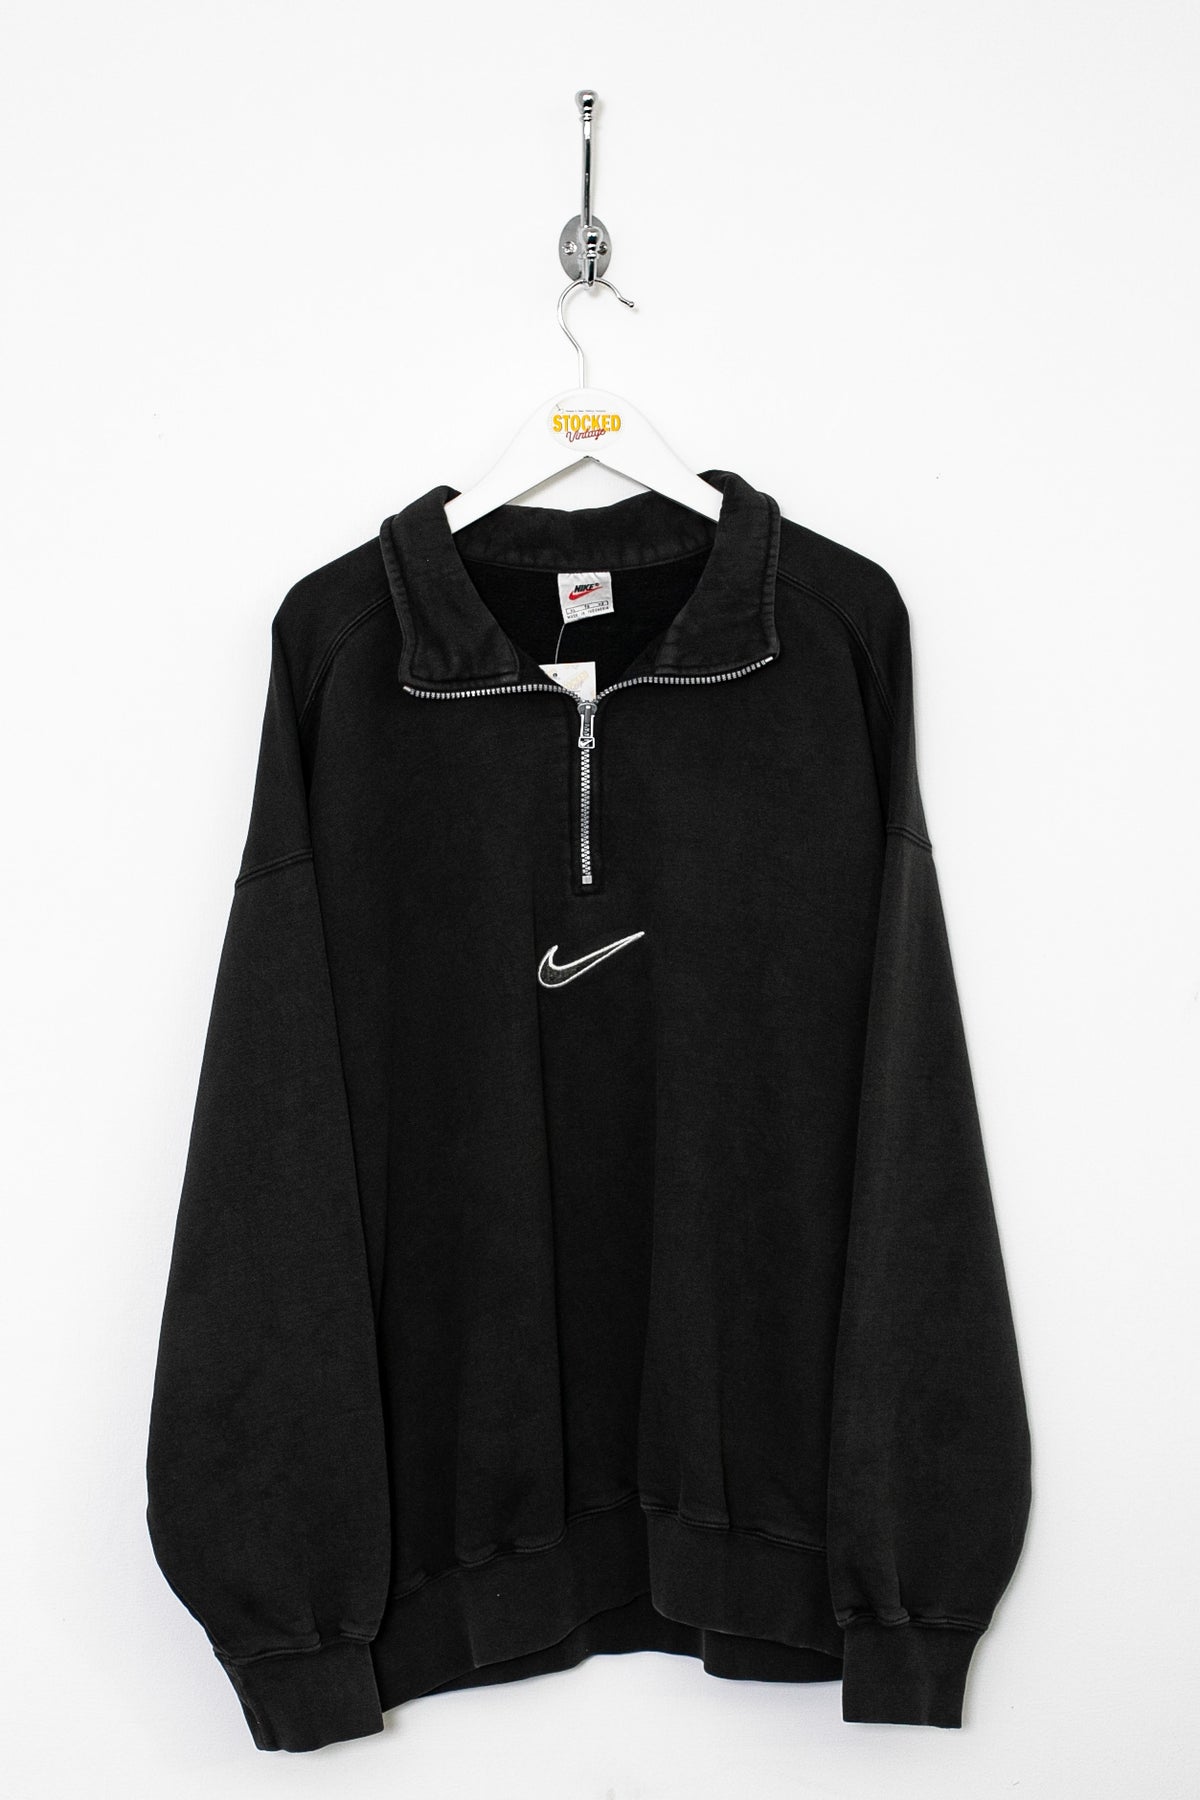 90s Nike 1/4 Zip Sweatshirt (XL)